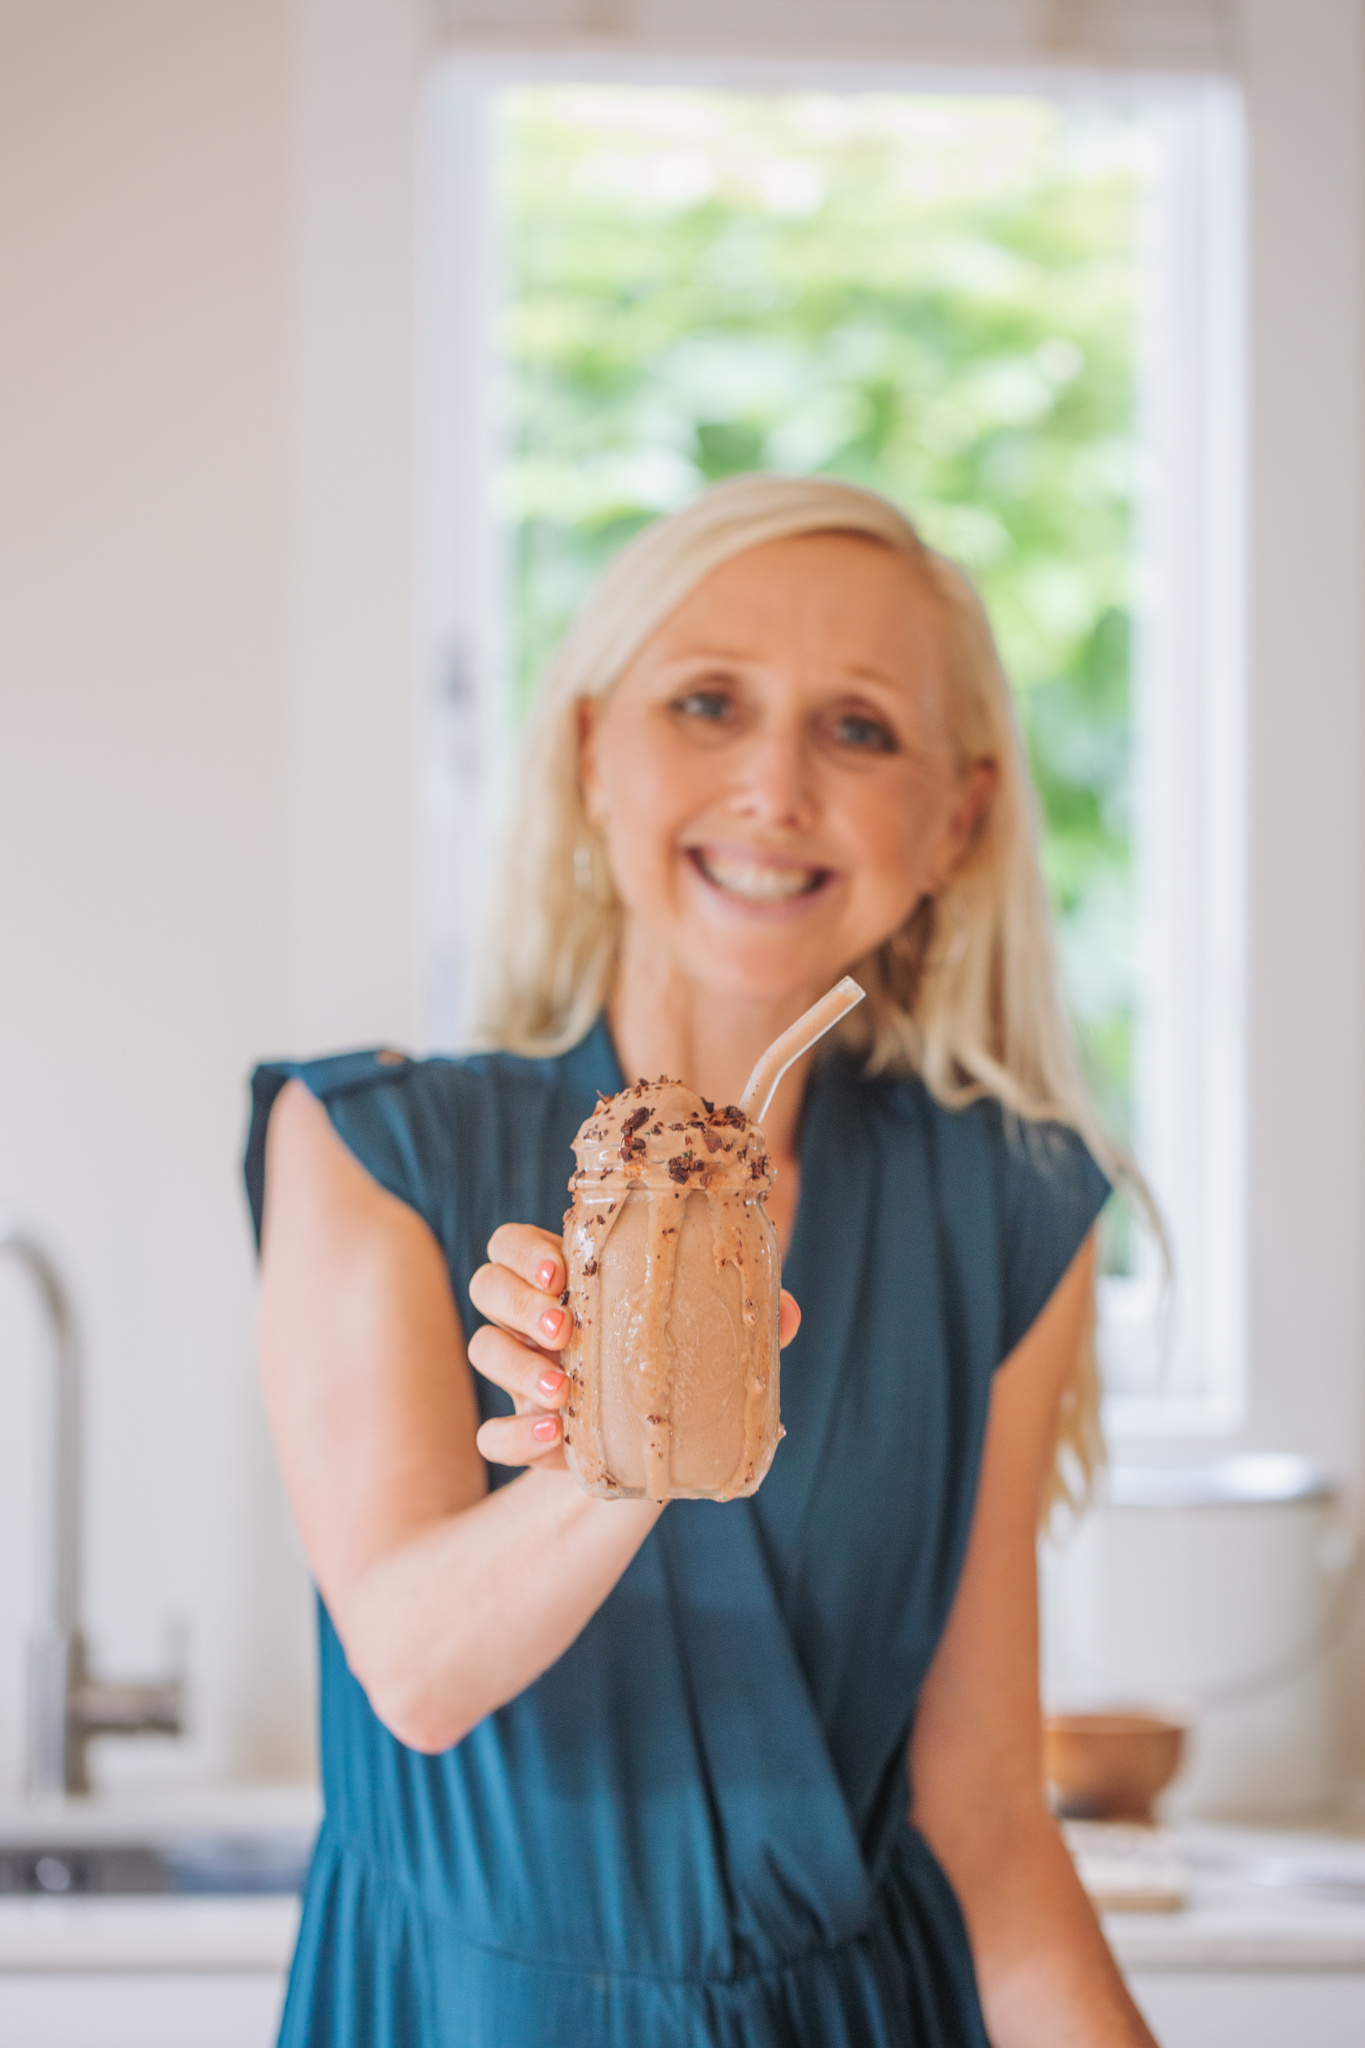 Buffy Ellen holding a milkshake with glass straw and cacao nibs in mason jar